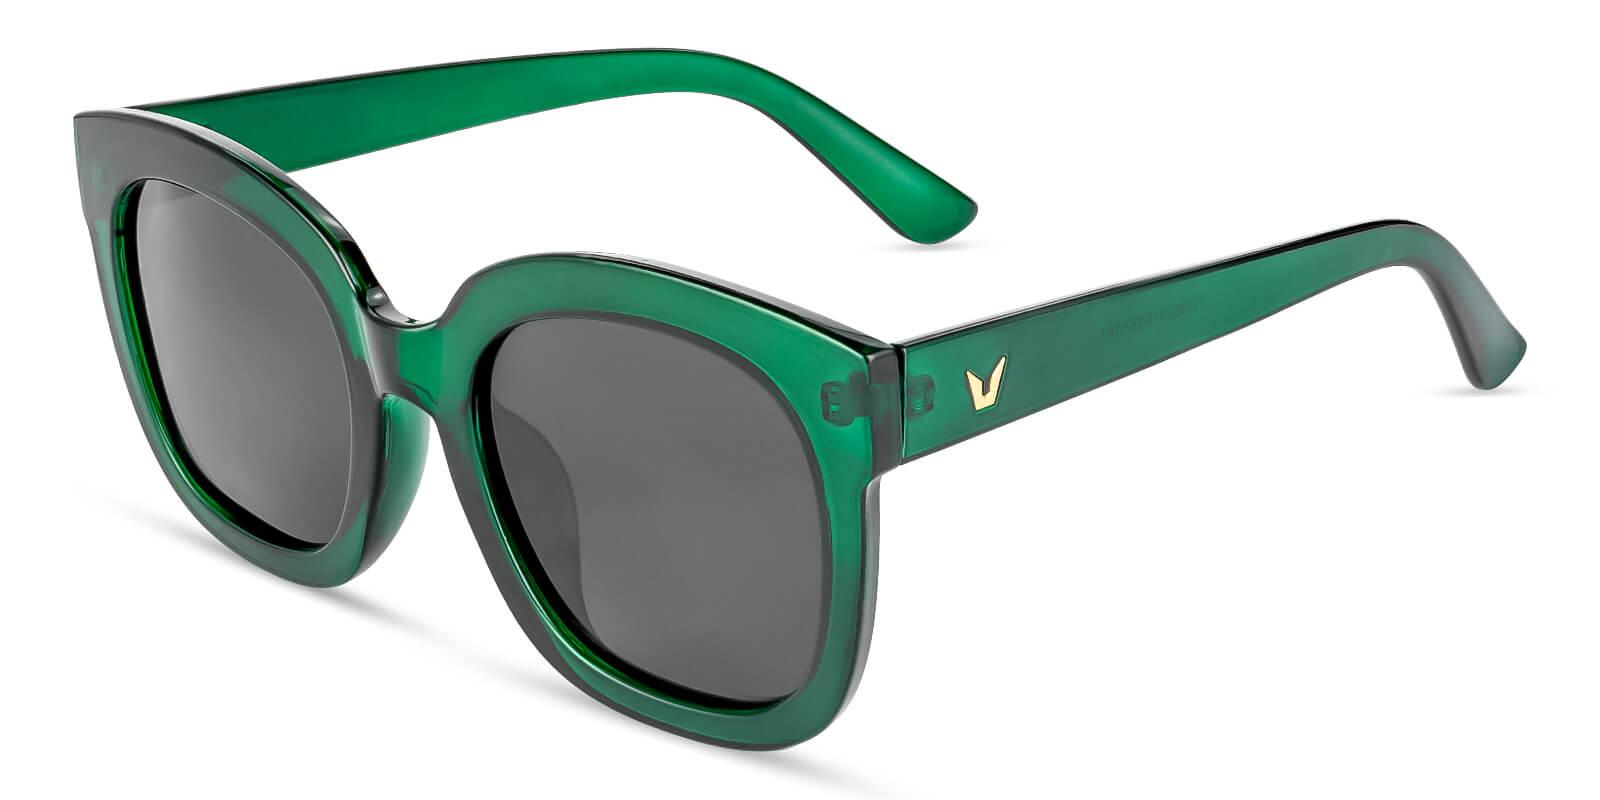 Kudos Green Plastic Fashion , Sunglasses Frames from ABBE Glasses